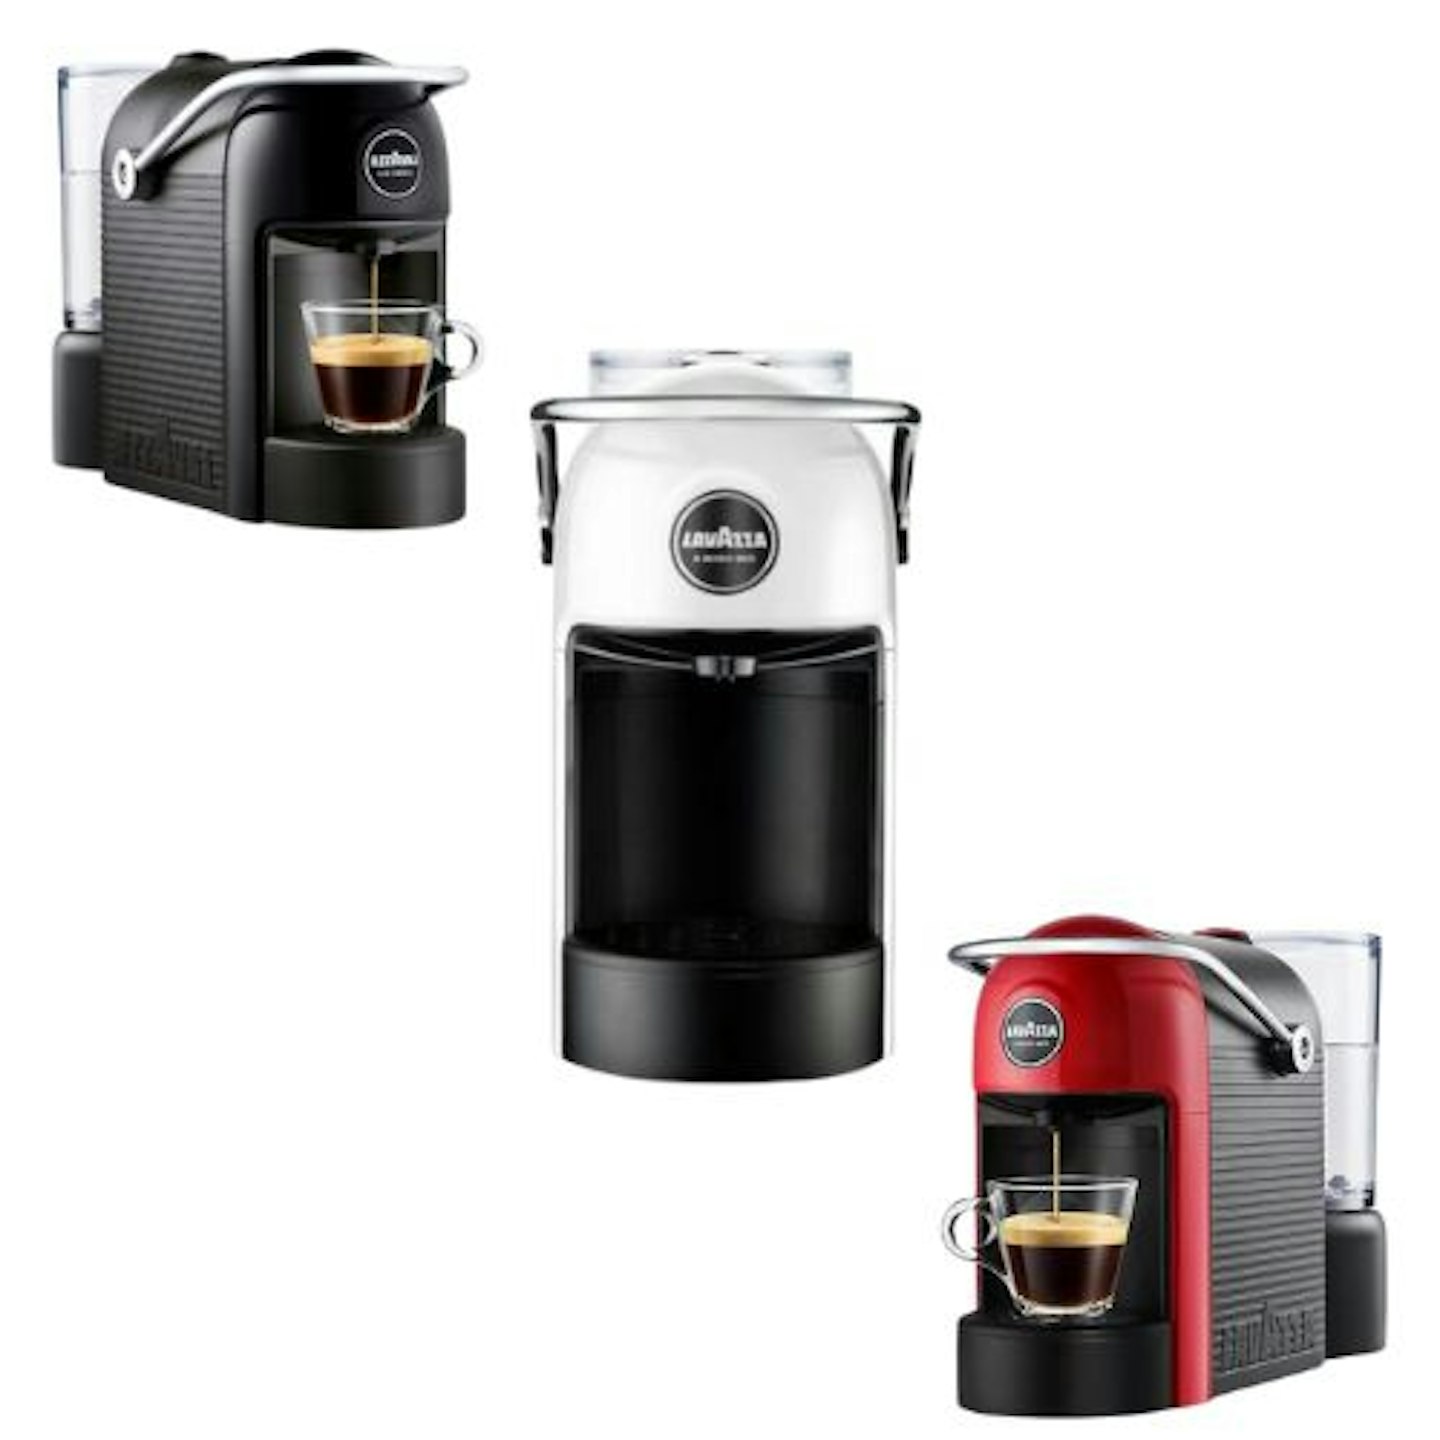 Which Lavazza Coffee Machine Is Best?